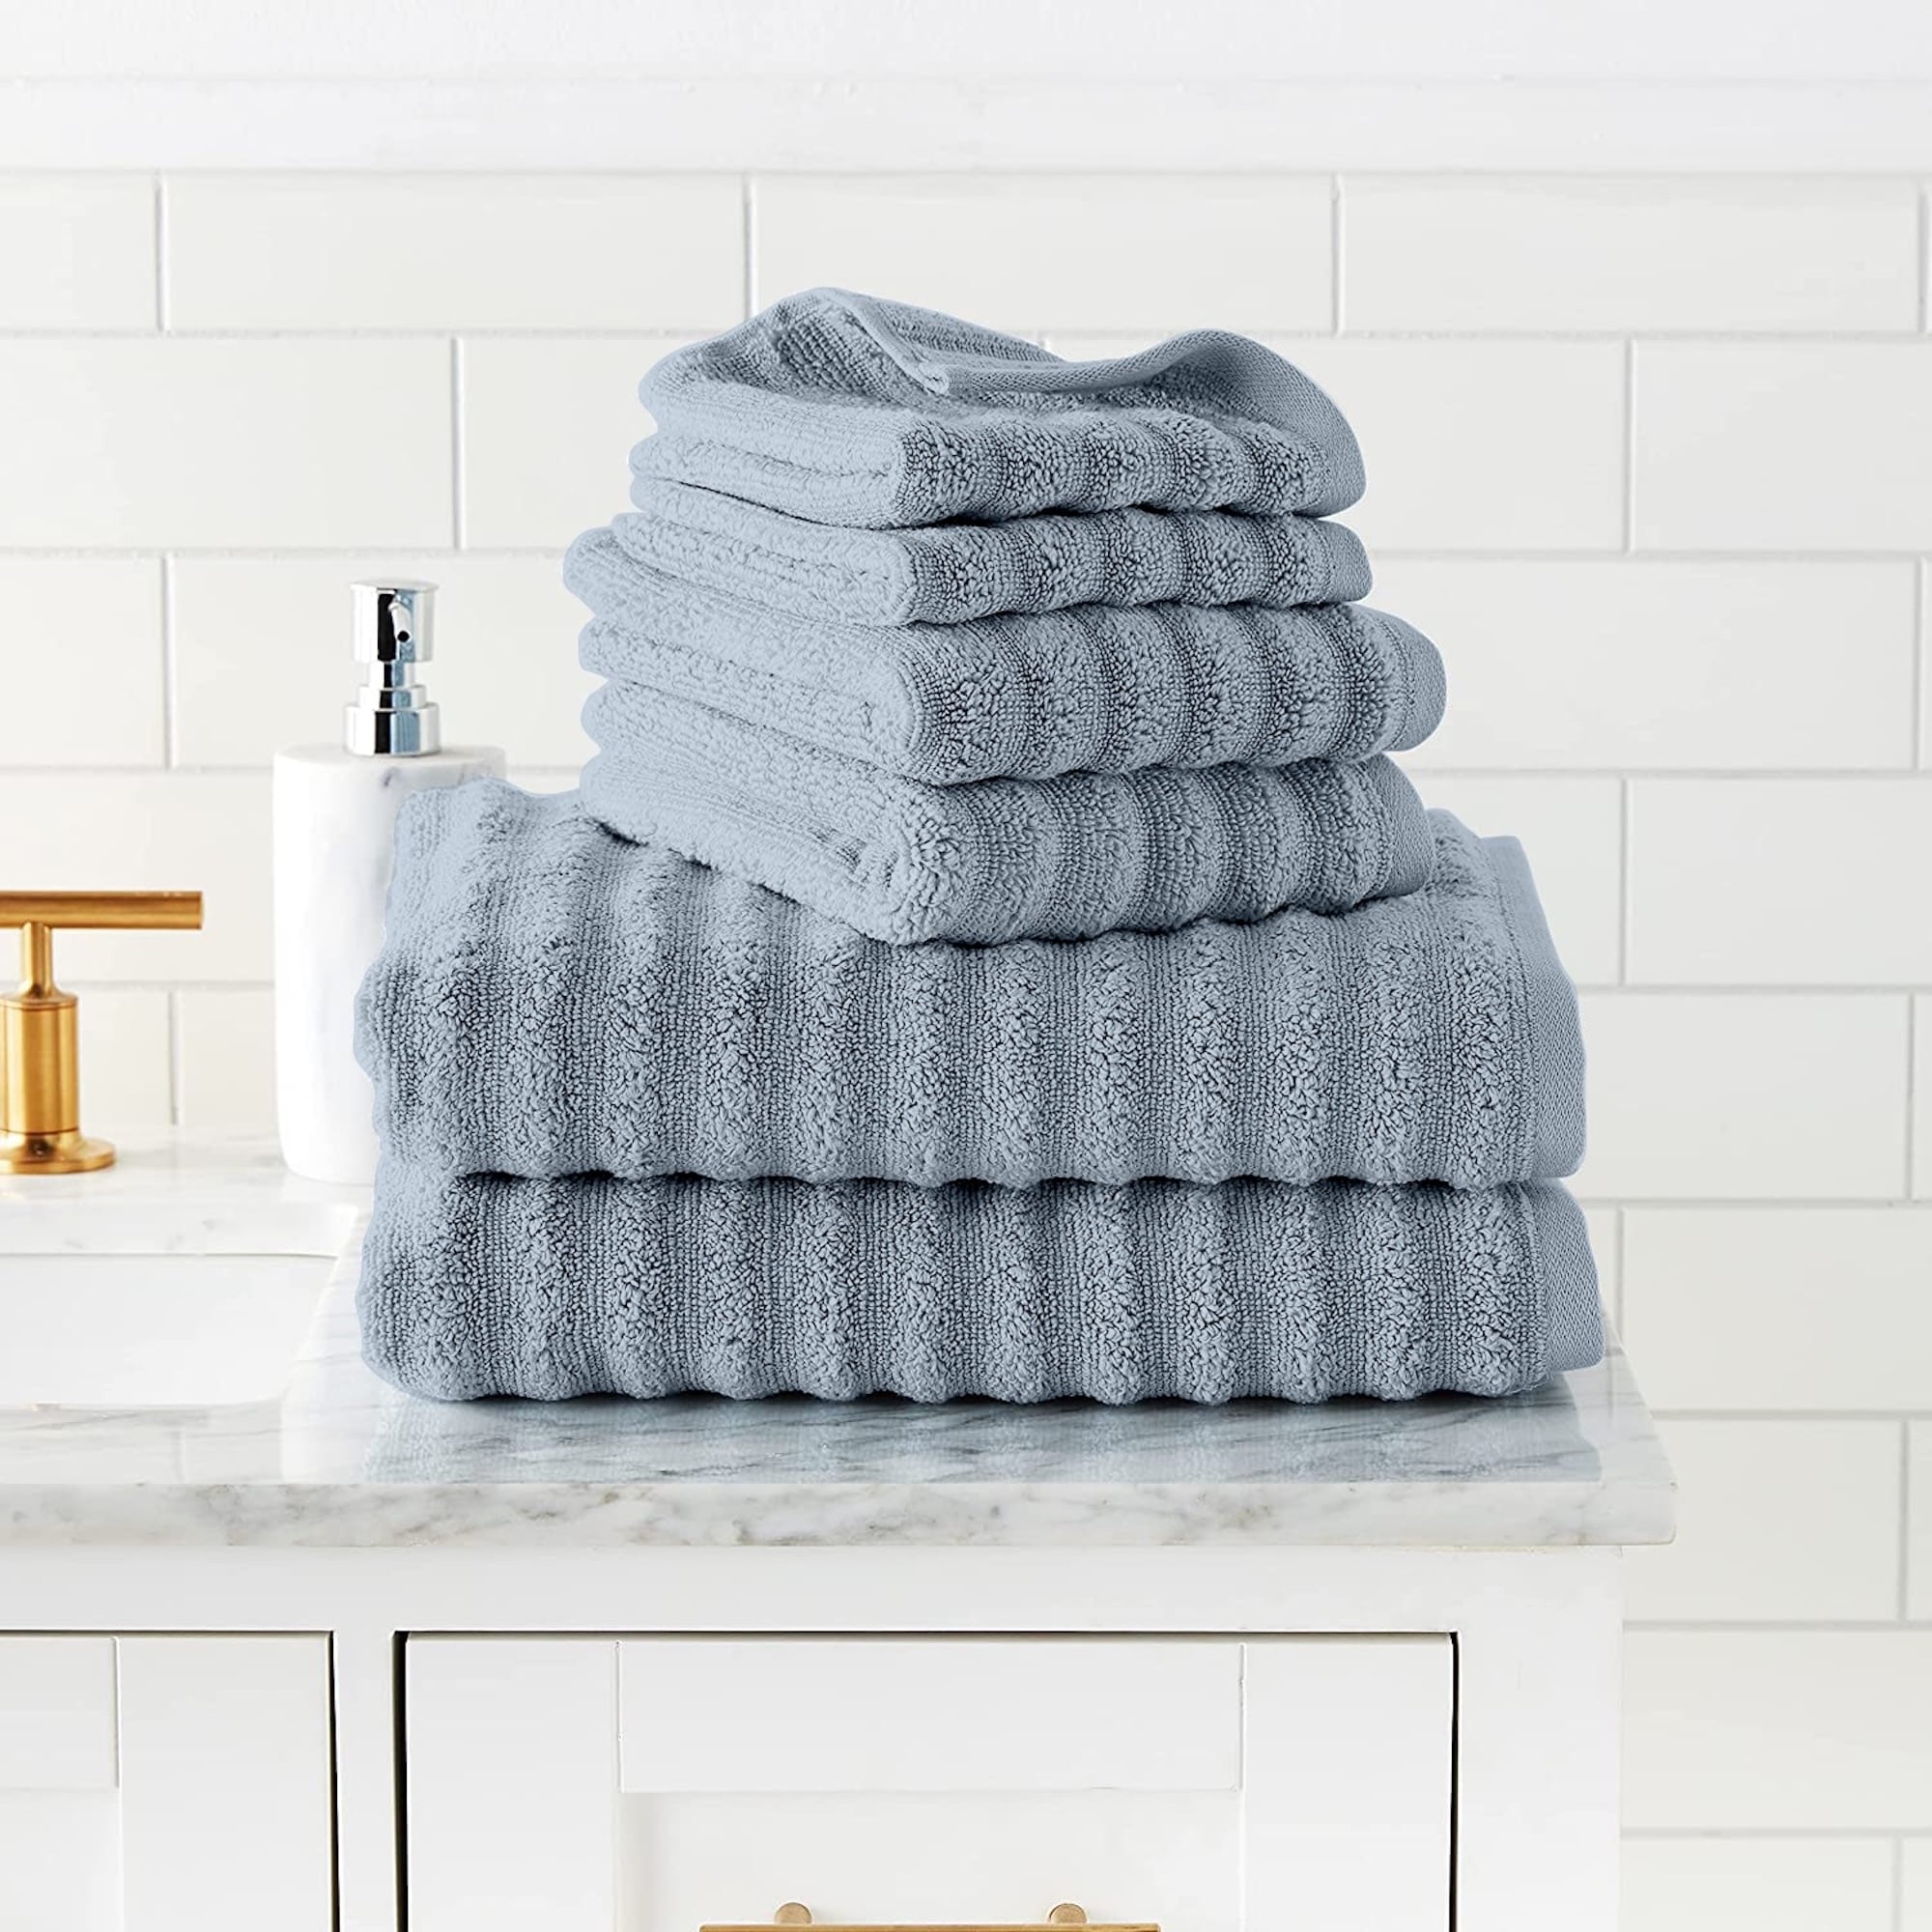 Lacoste Heritage 6 Piece Towel Set - On Sale - Bed Bath & Beyond - 38423331